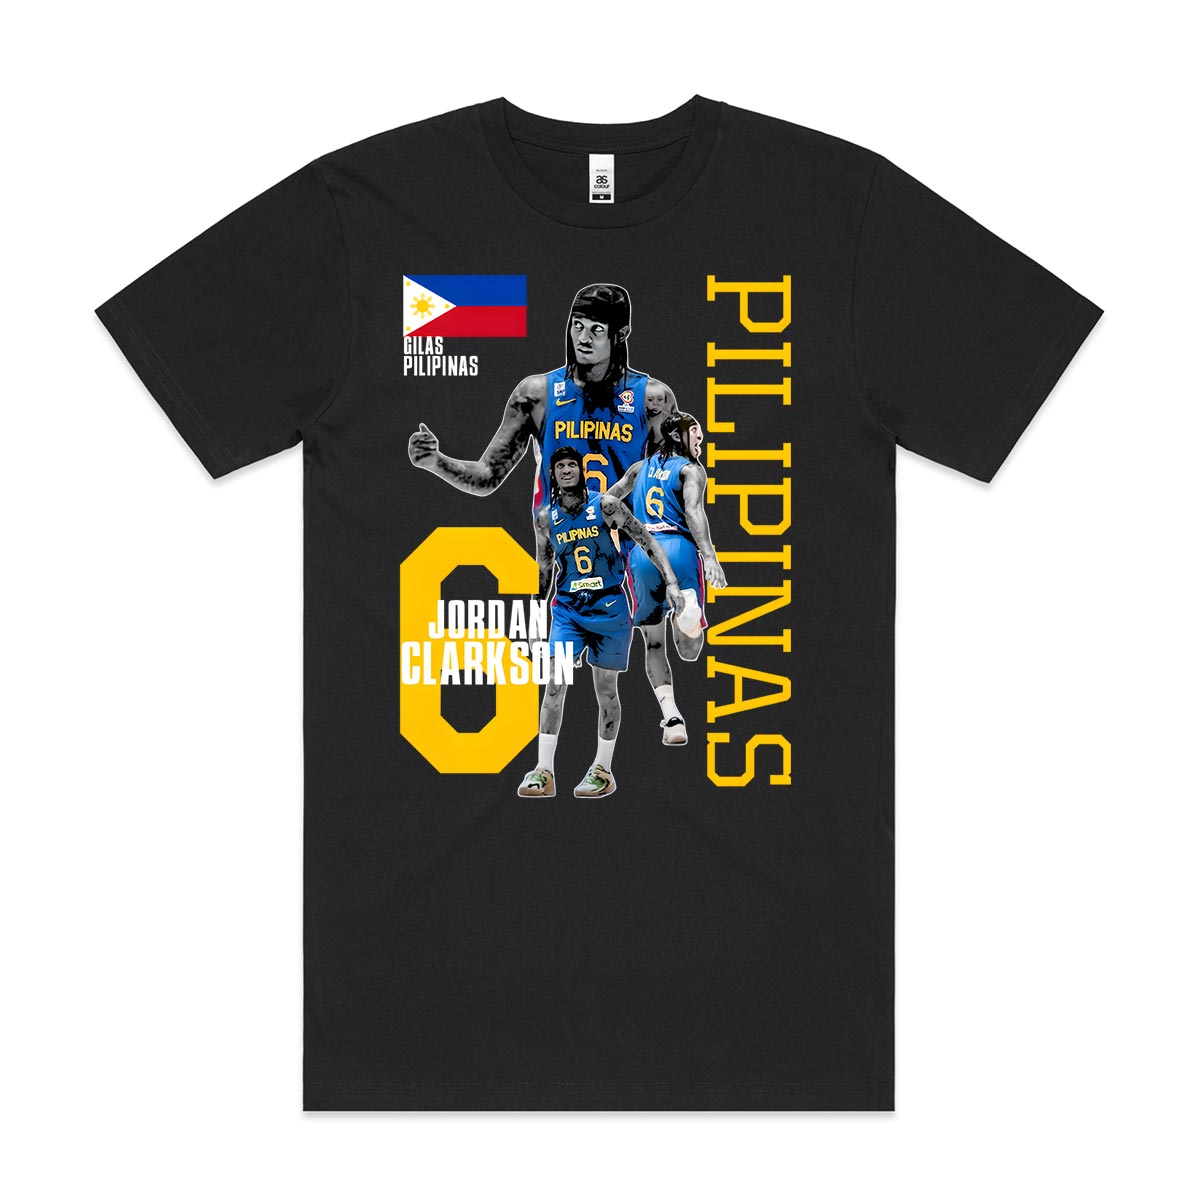 Jordan Clarkson T-Shirt philippines National Player Basketball Culture Tee